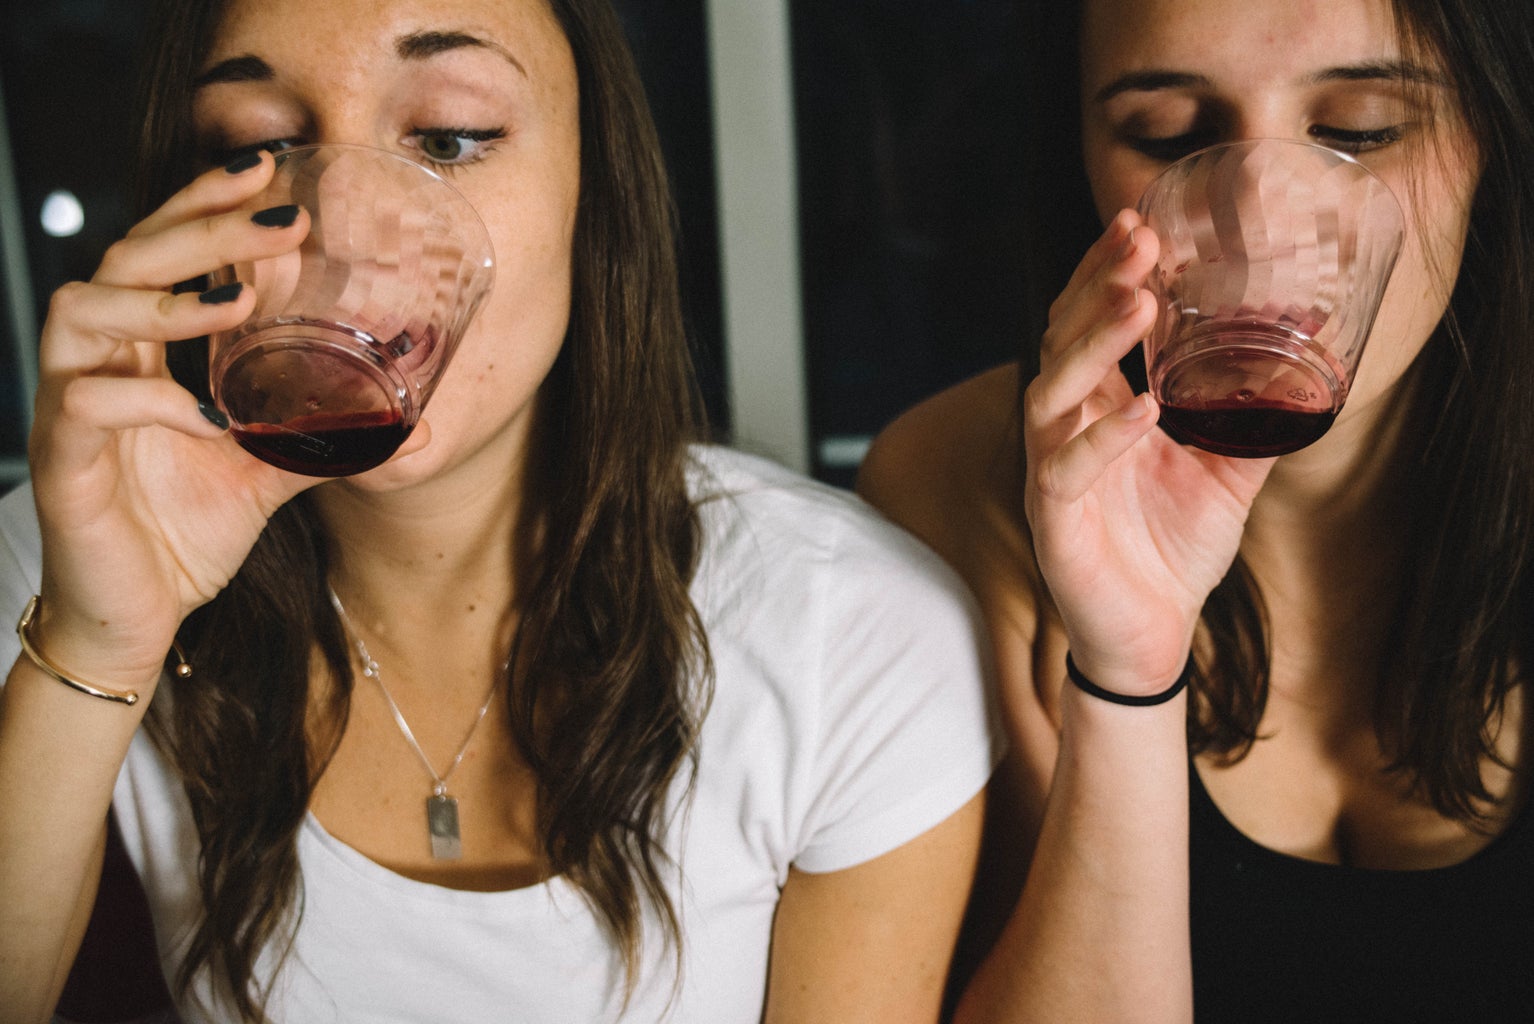 Girls Drinking Wine